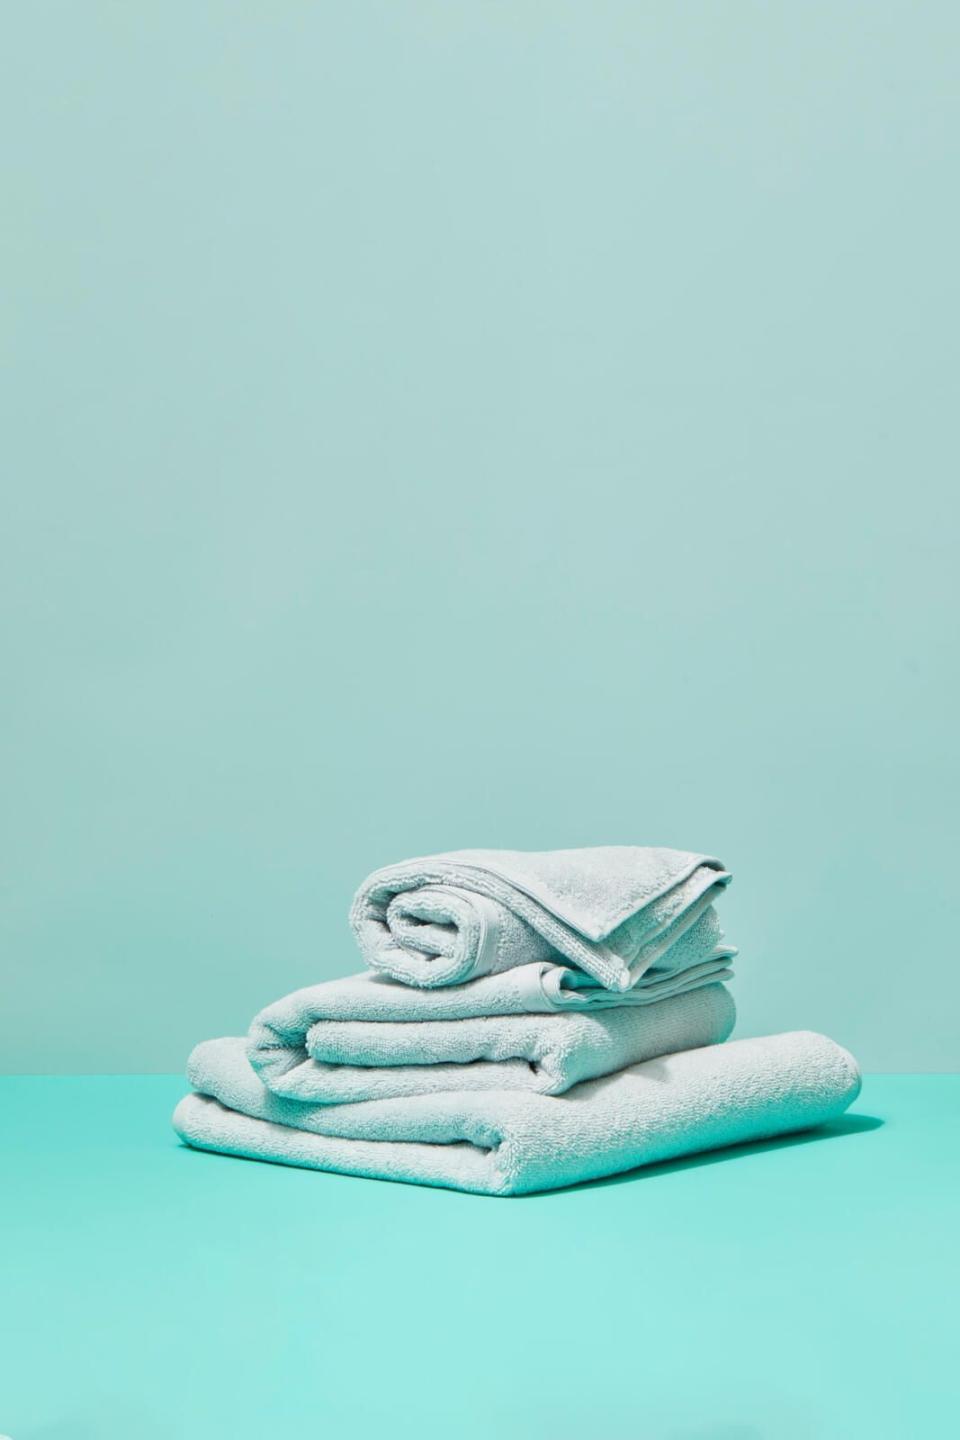 8) Organic Cotton Terry Towel